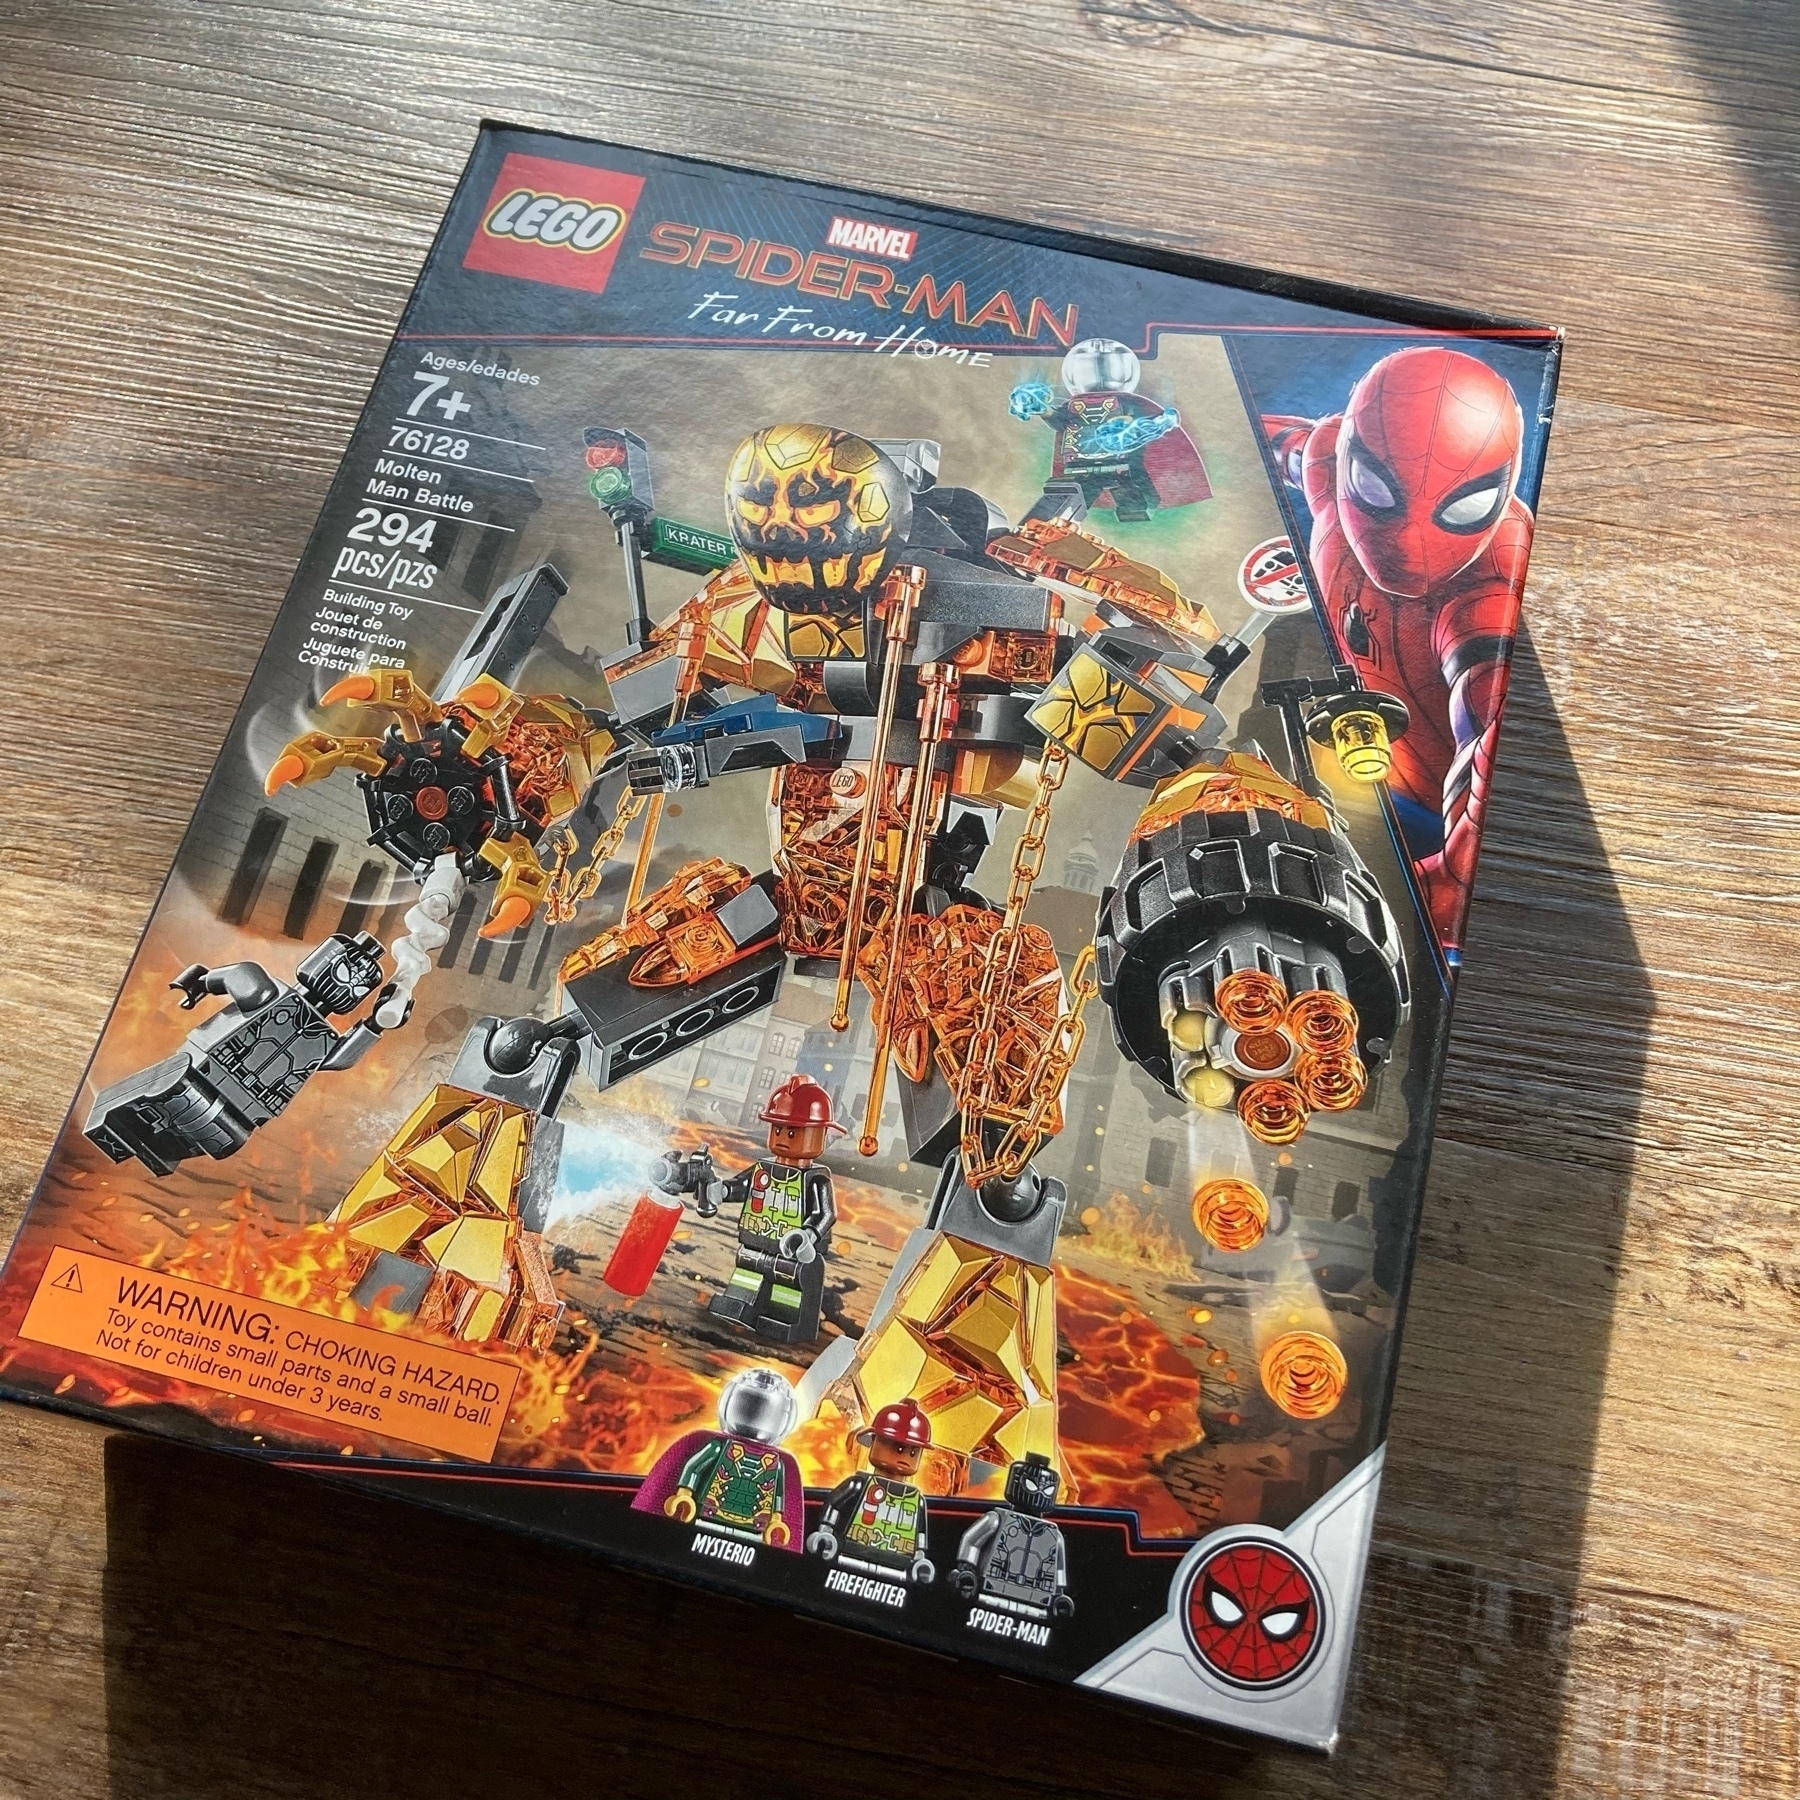 Spiderman lego set. 